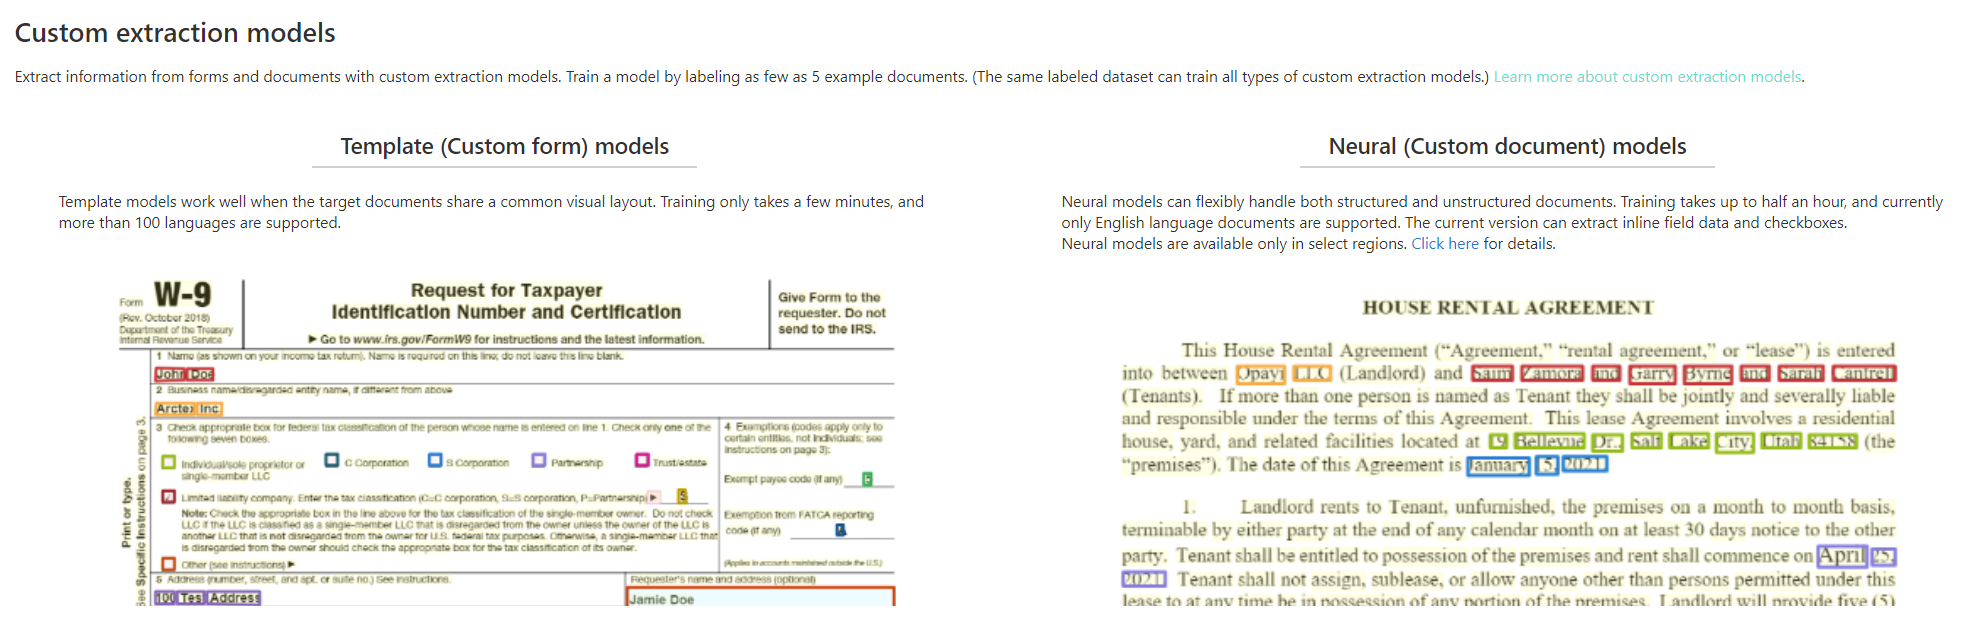 Cuplikan layar analisis model ekstraksi kustom di Document Intelligence Studio.